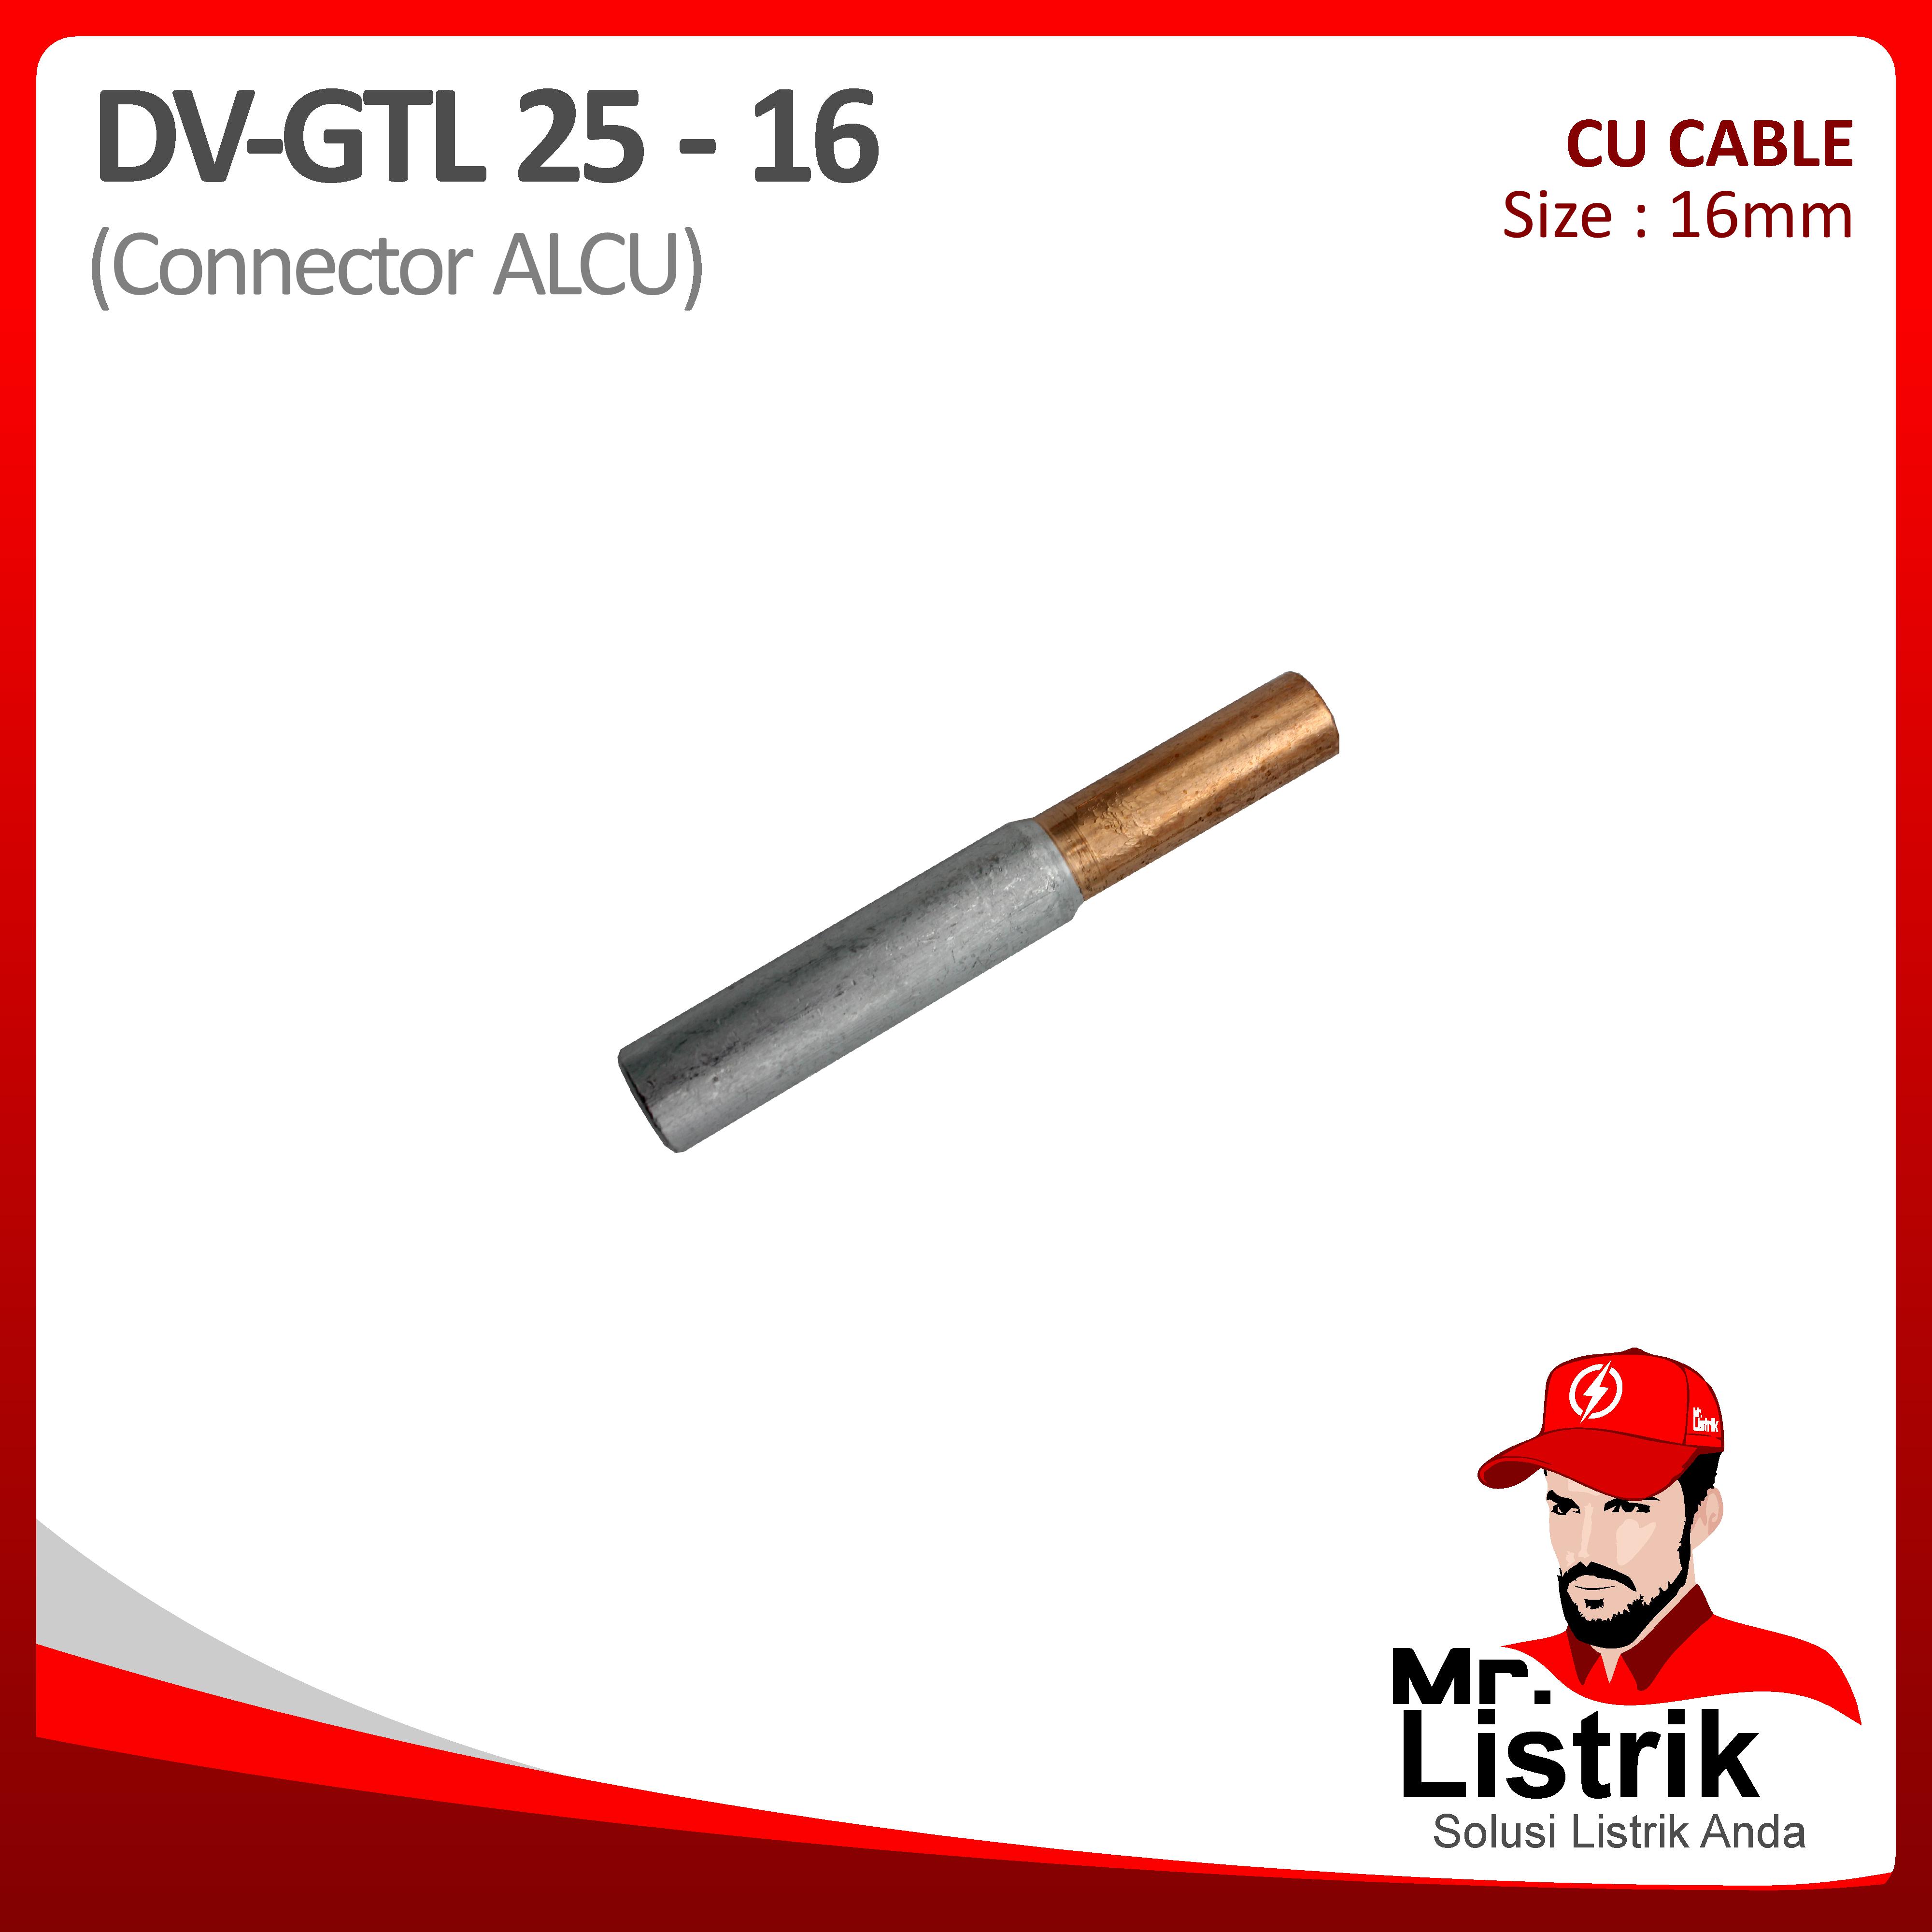 Connector ALCU 25mm DV GTL-25-16